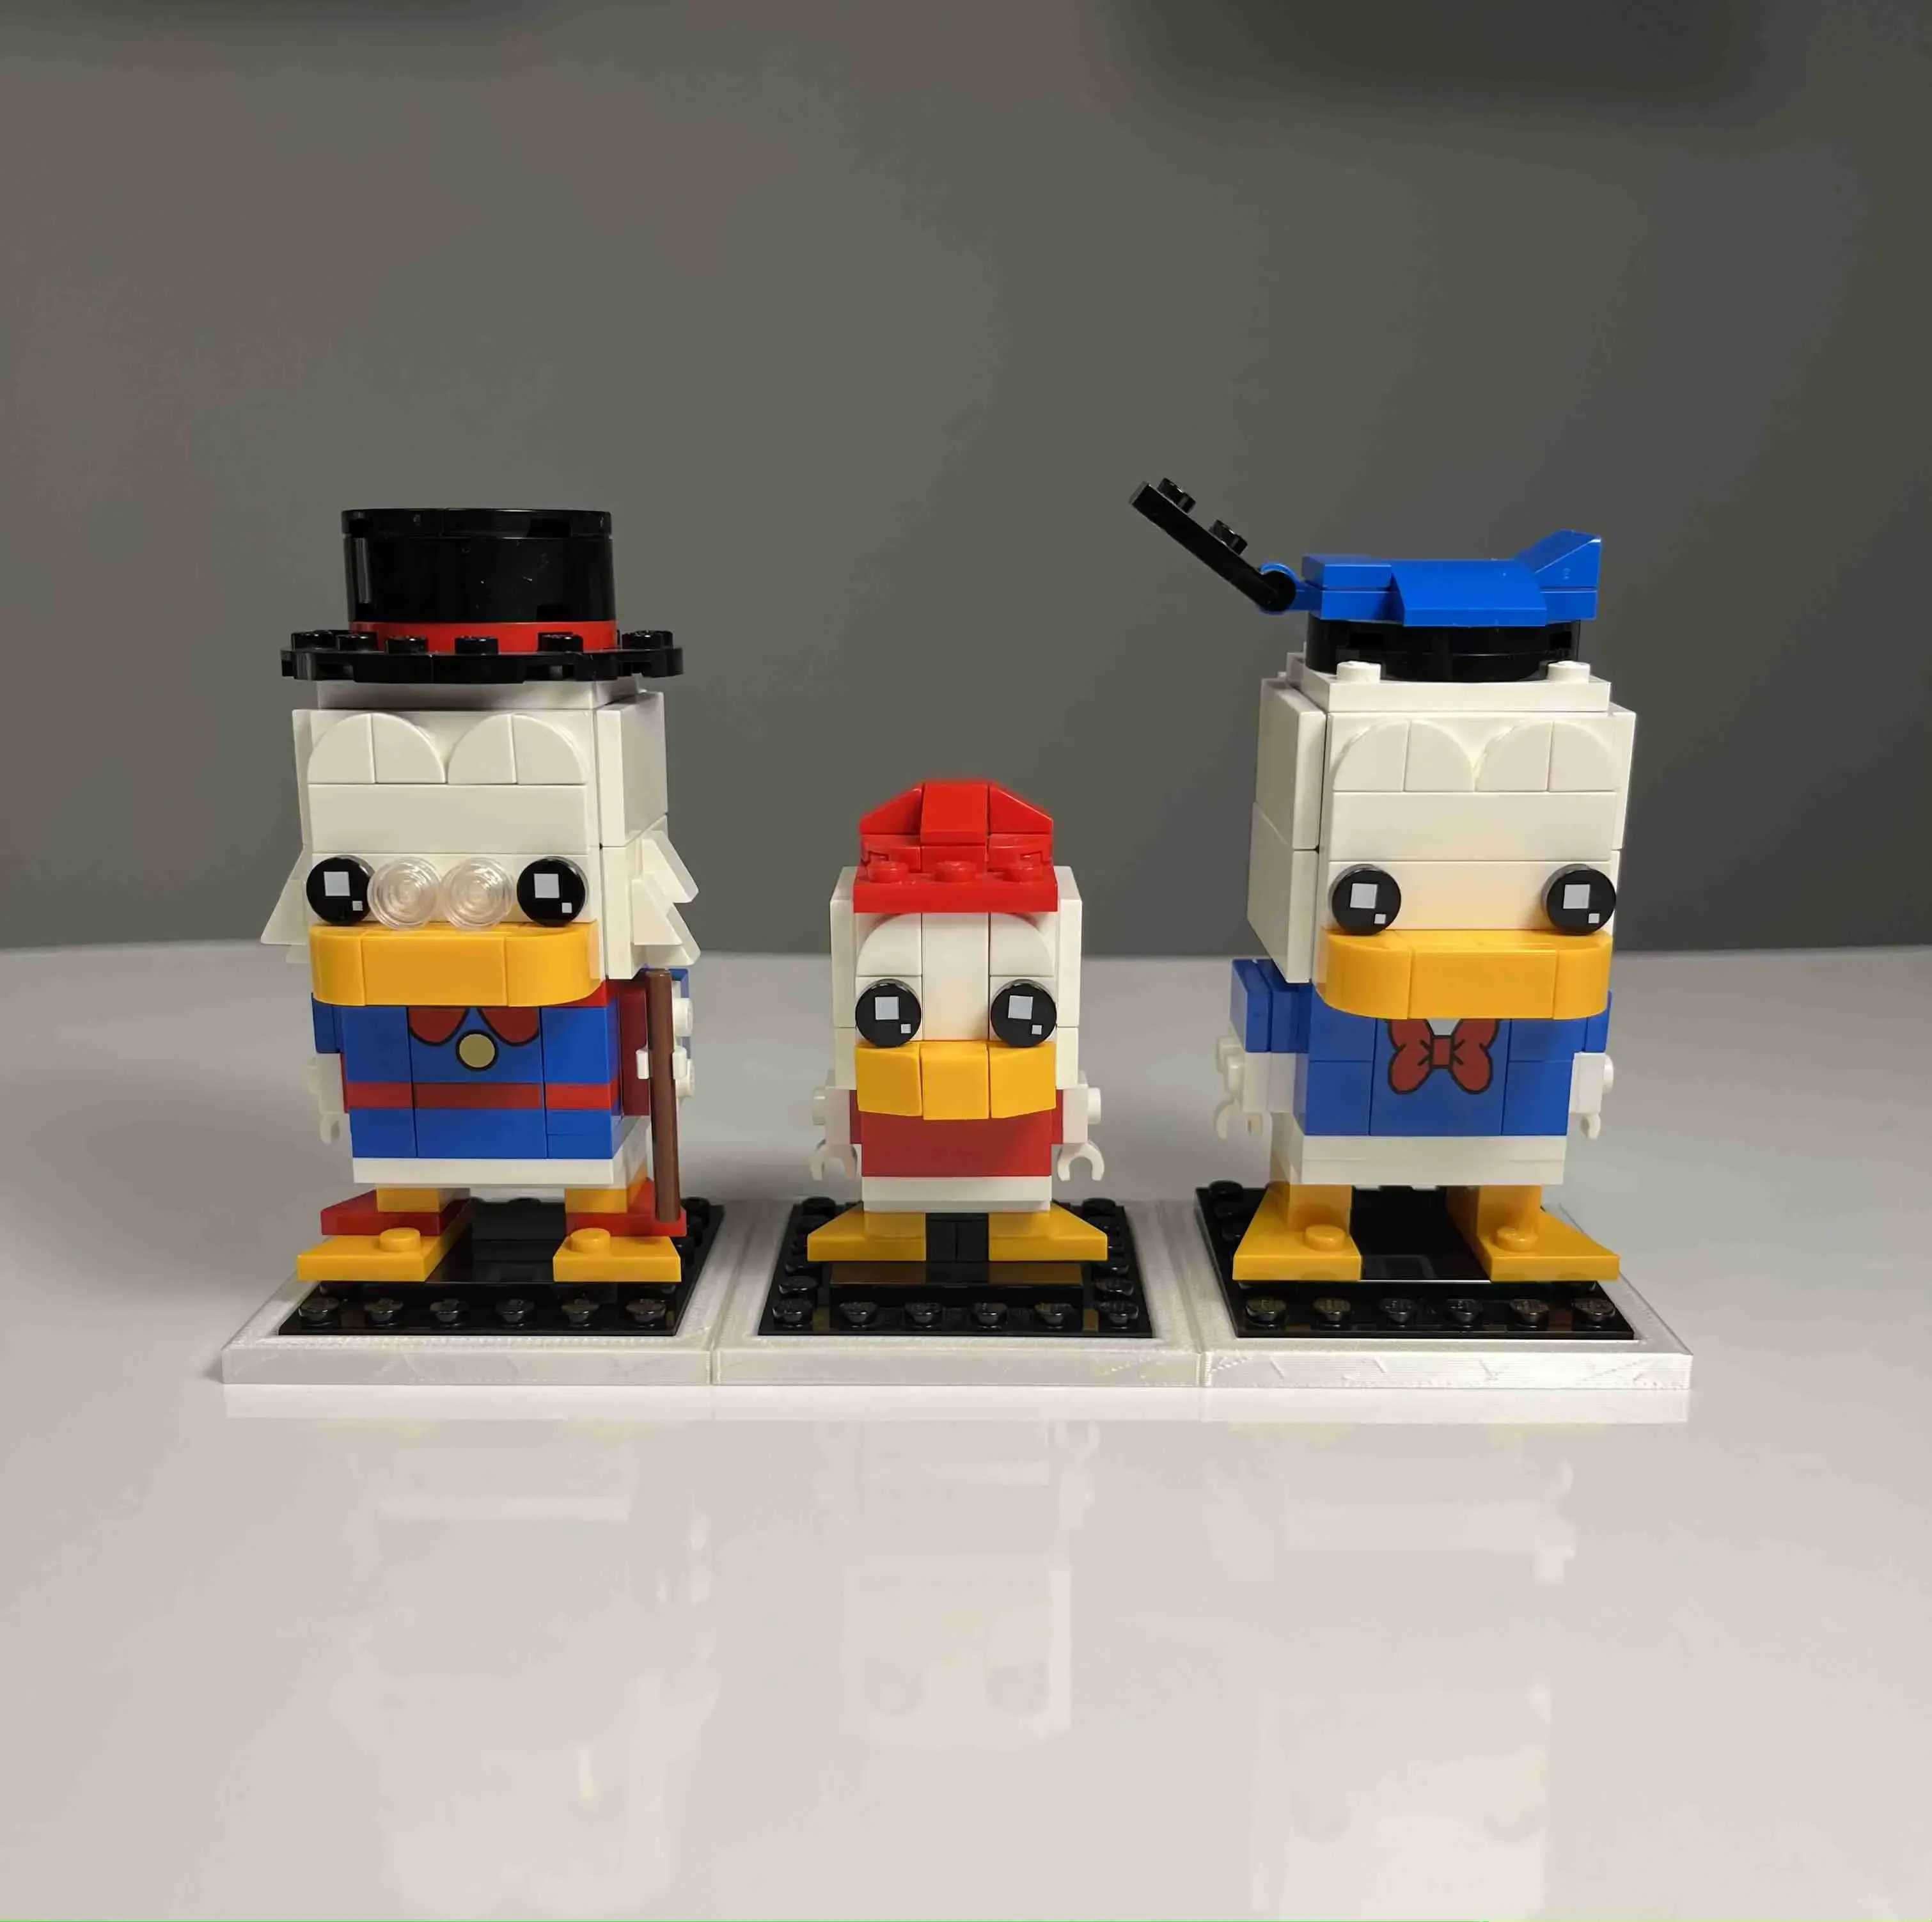 MODULAR LEGO BRICKHEADZ DISPLAY - LEGO EXPOSITOR for HOME